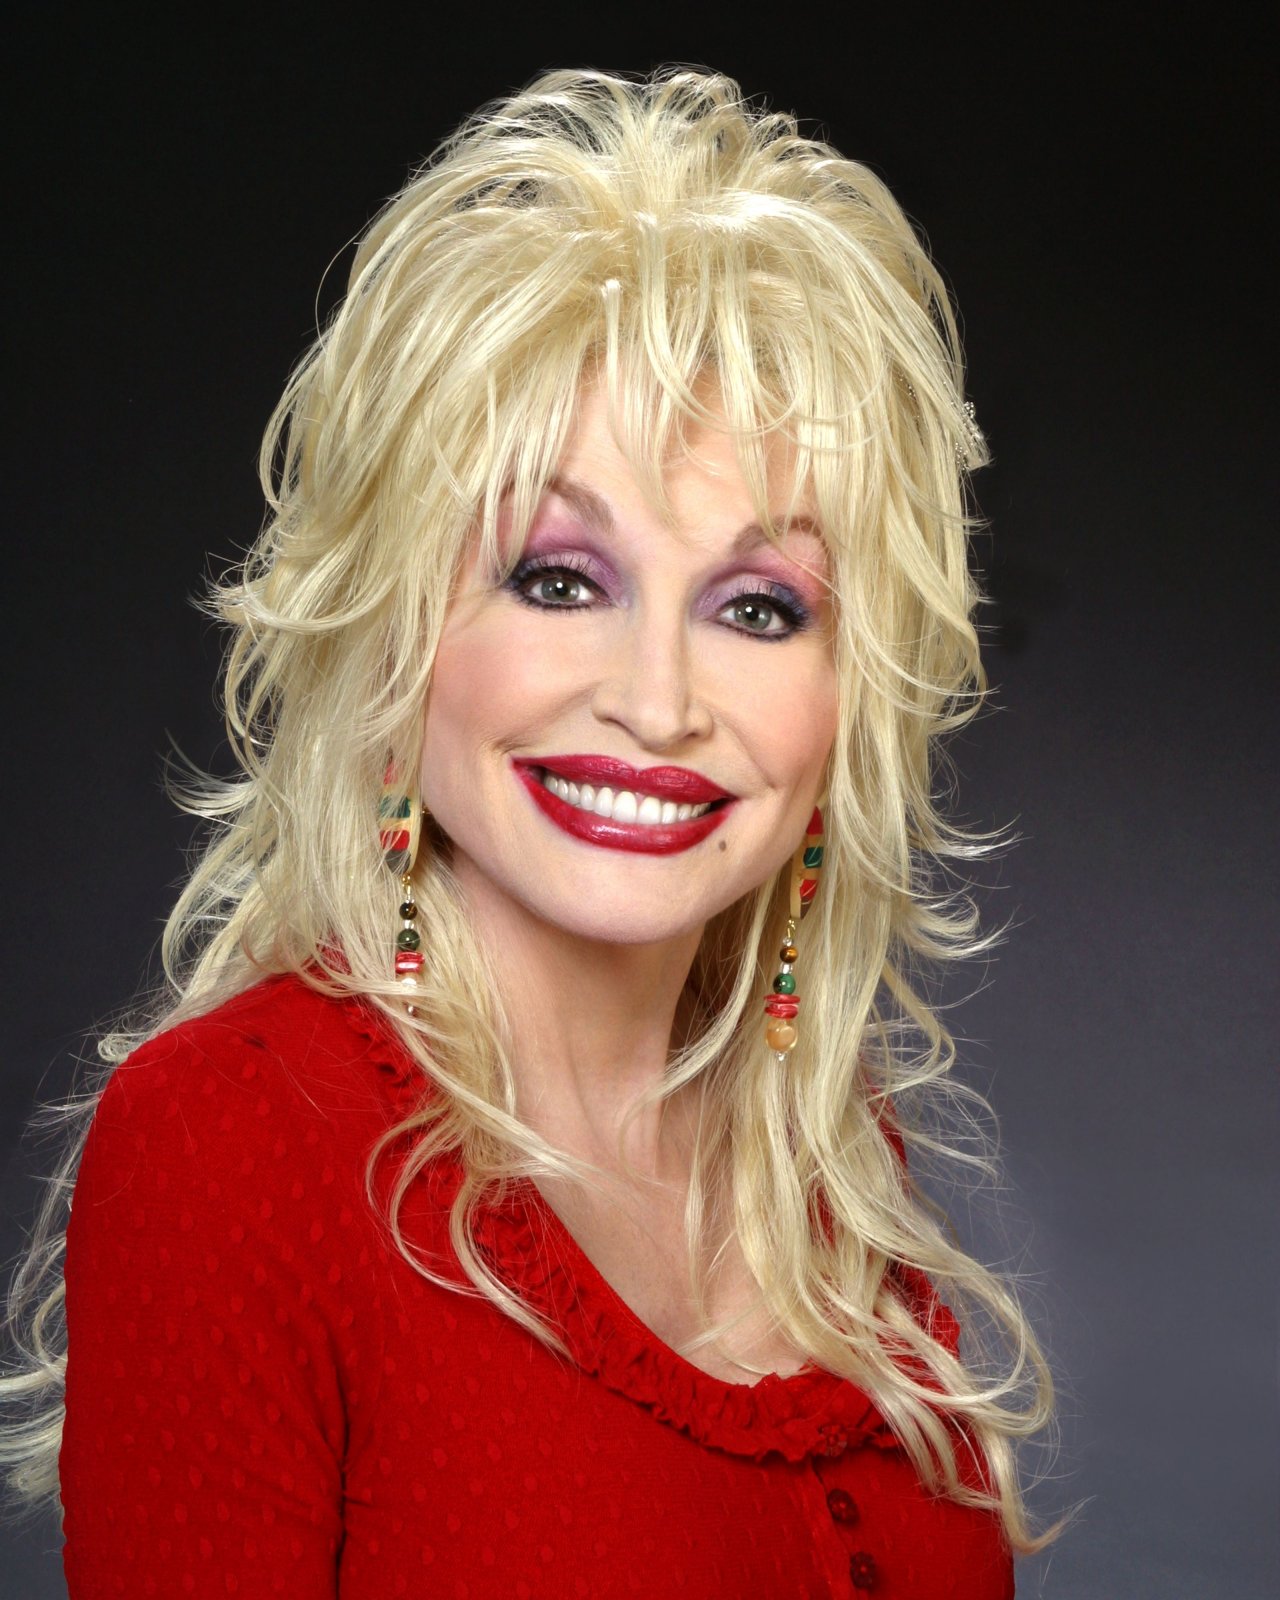 Dolly Parton Backgrounds, Compatible - PC, Mobile, Gadgets| 1280x1600 px